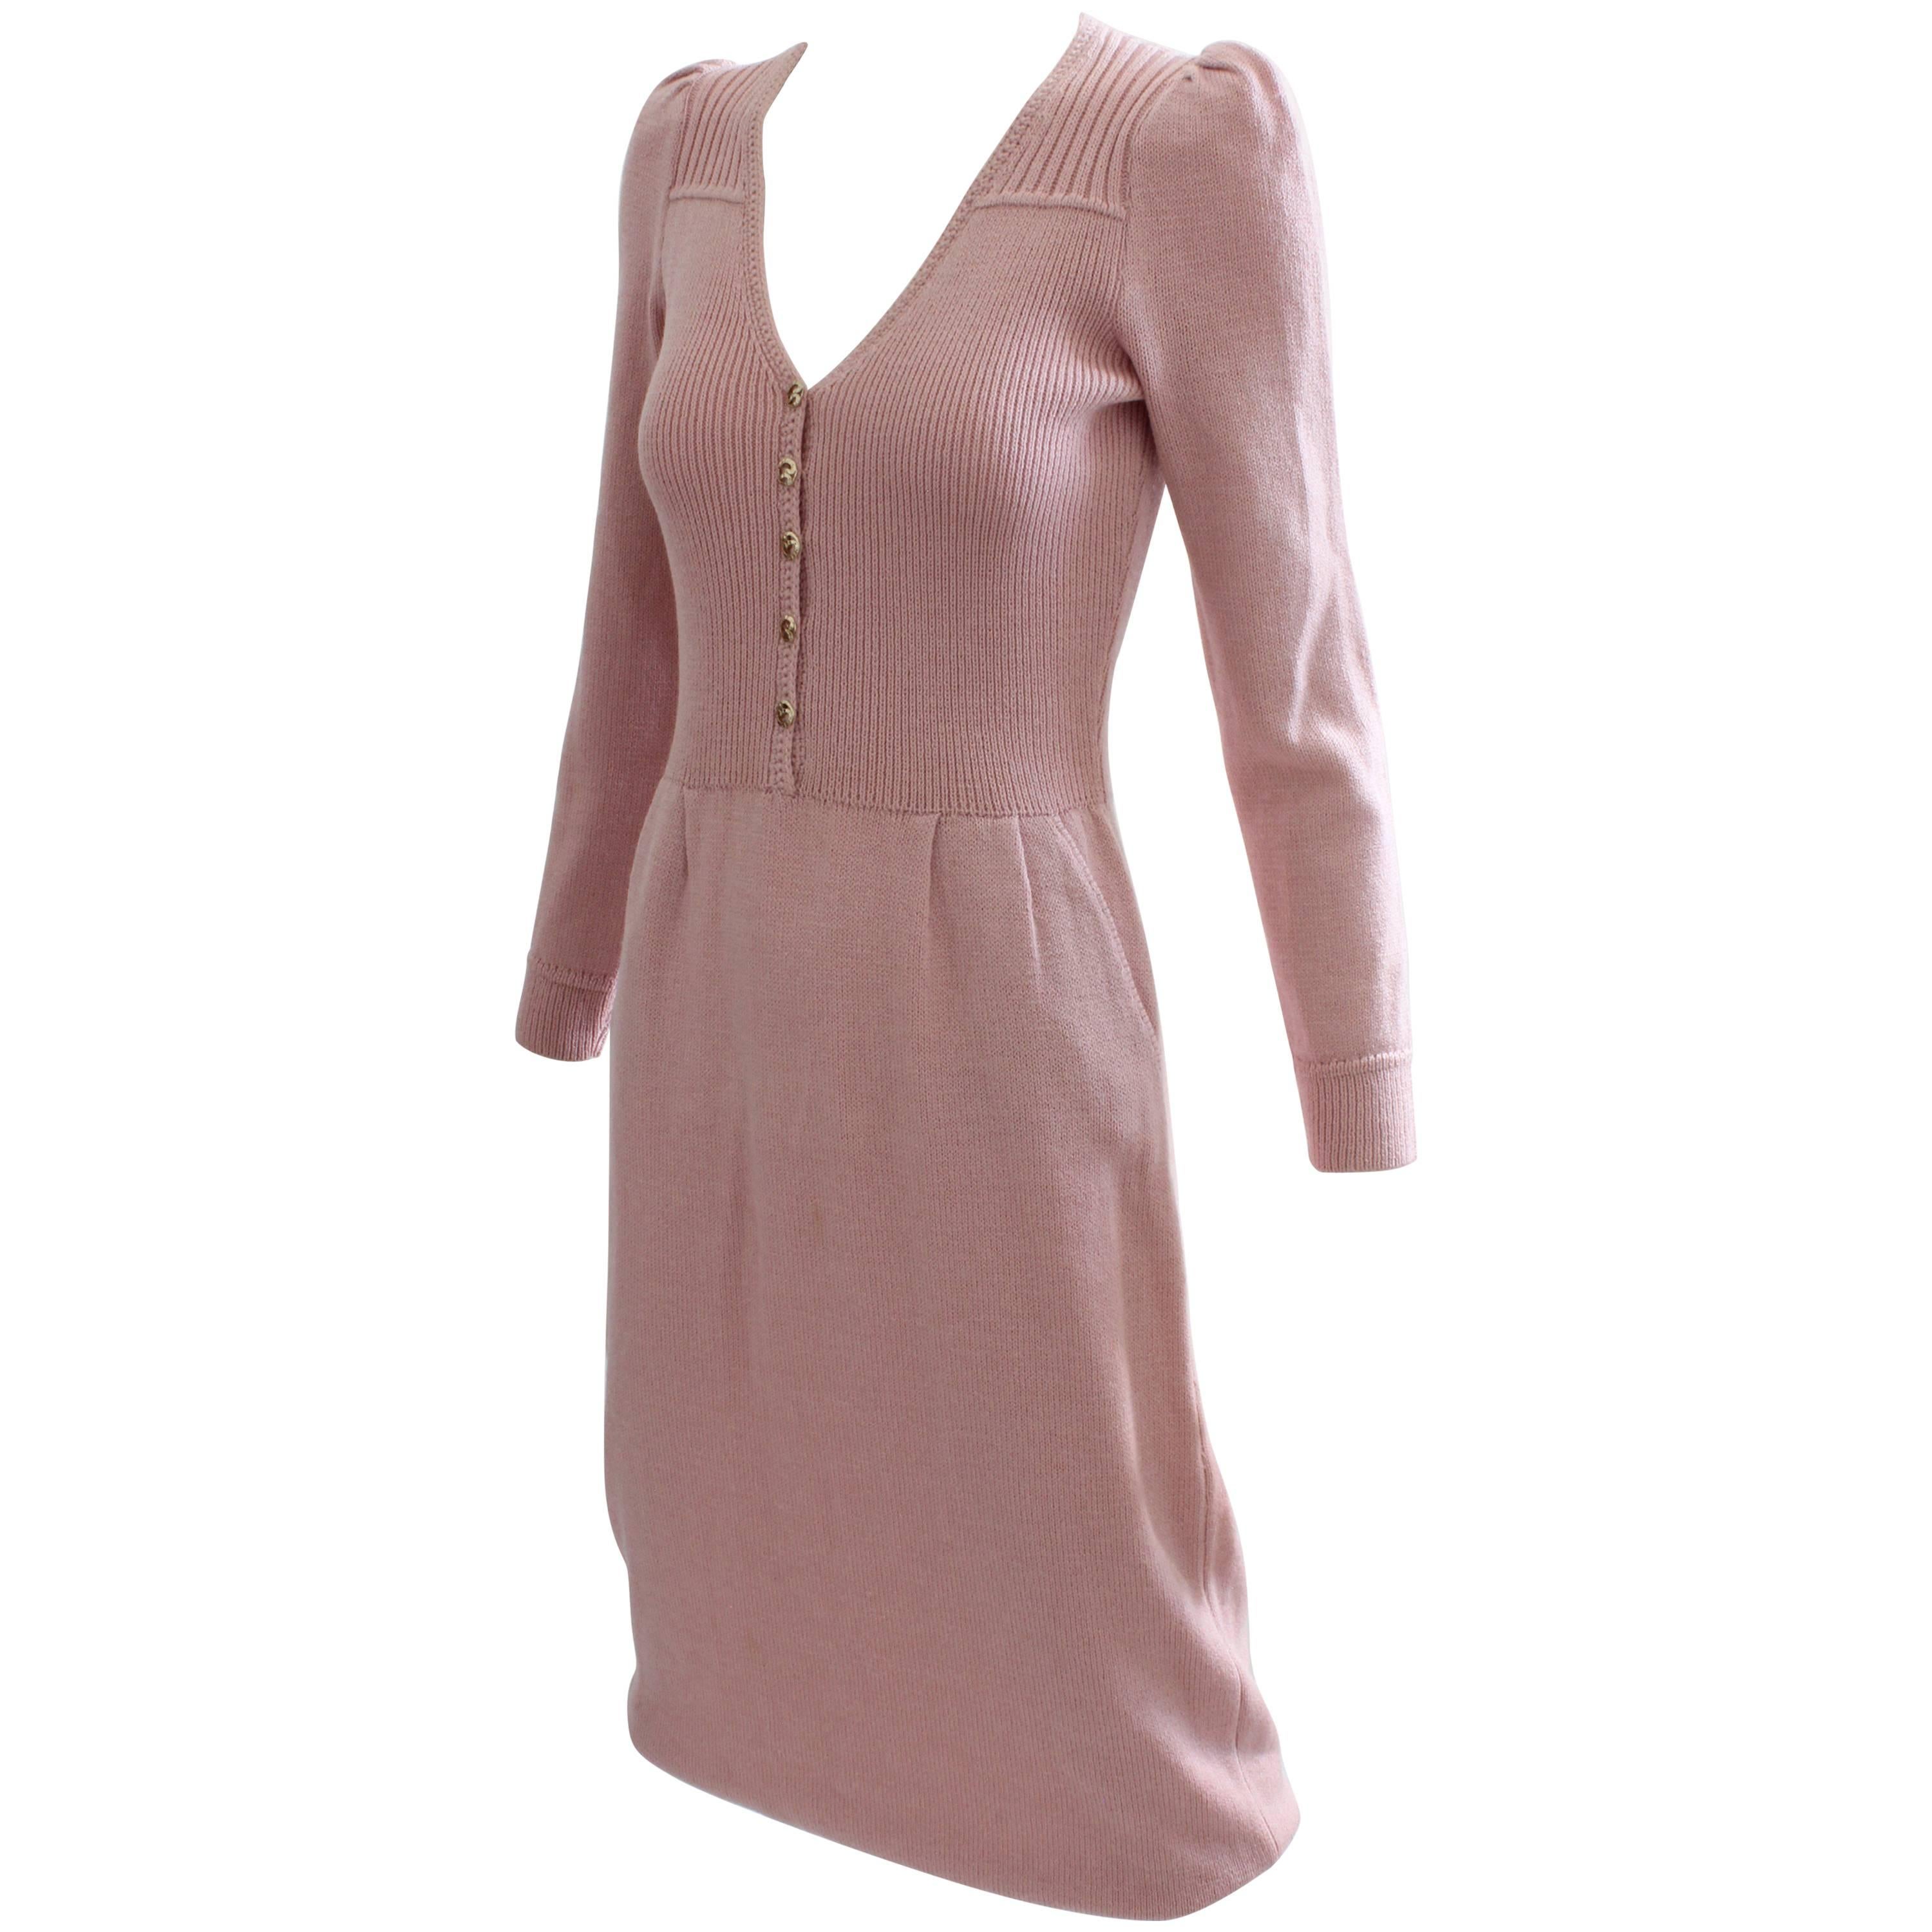 St John by Marie Gray Pink Knit Dress Vintage 70s Sz M